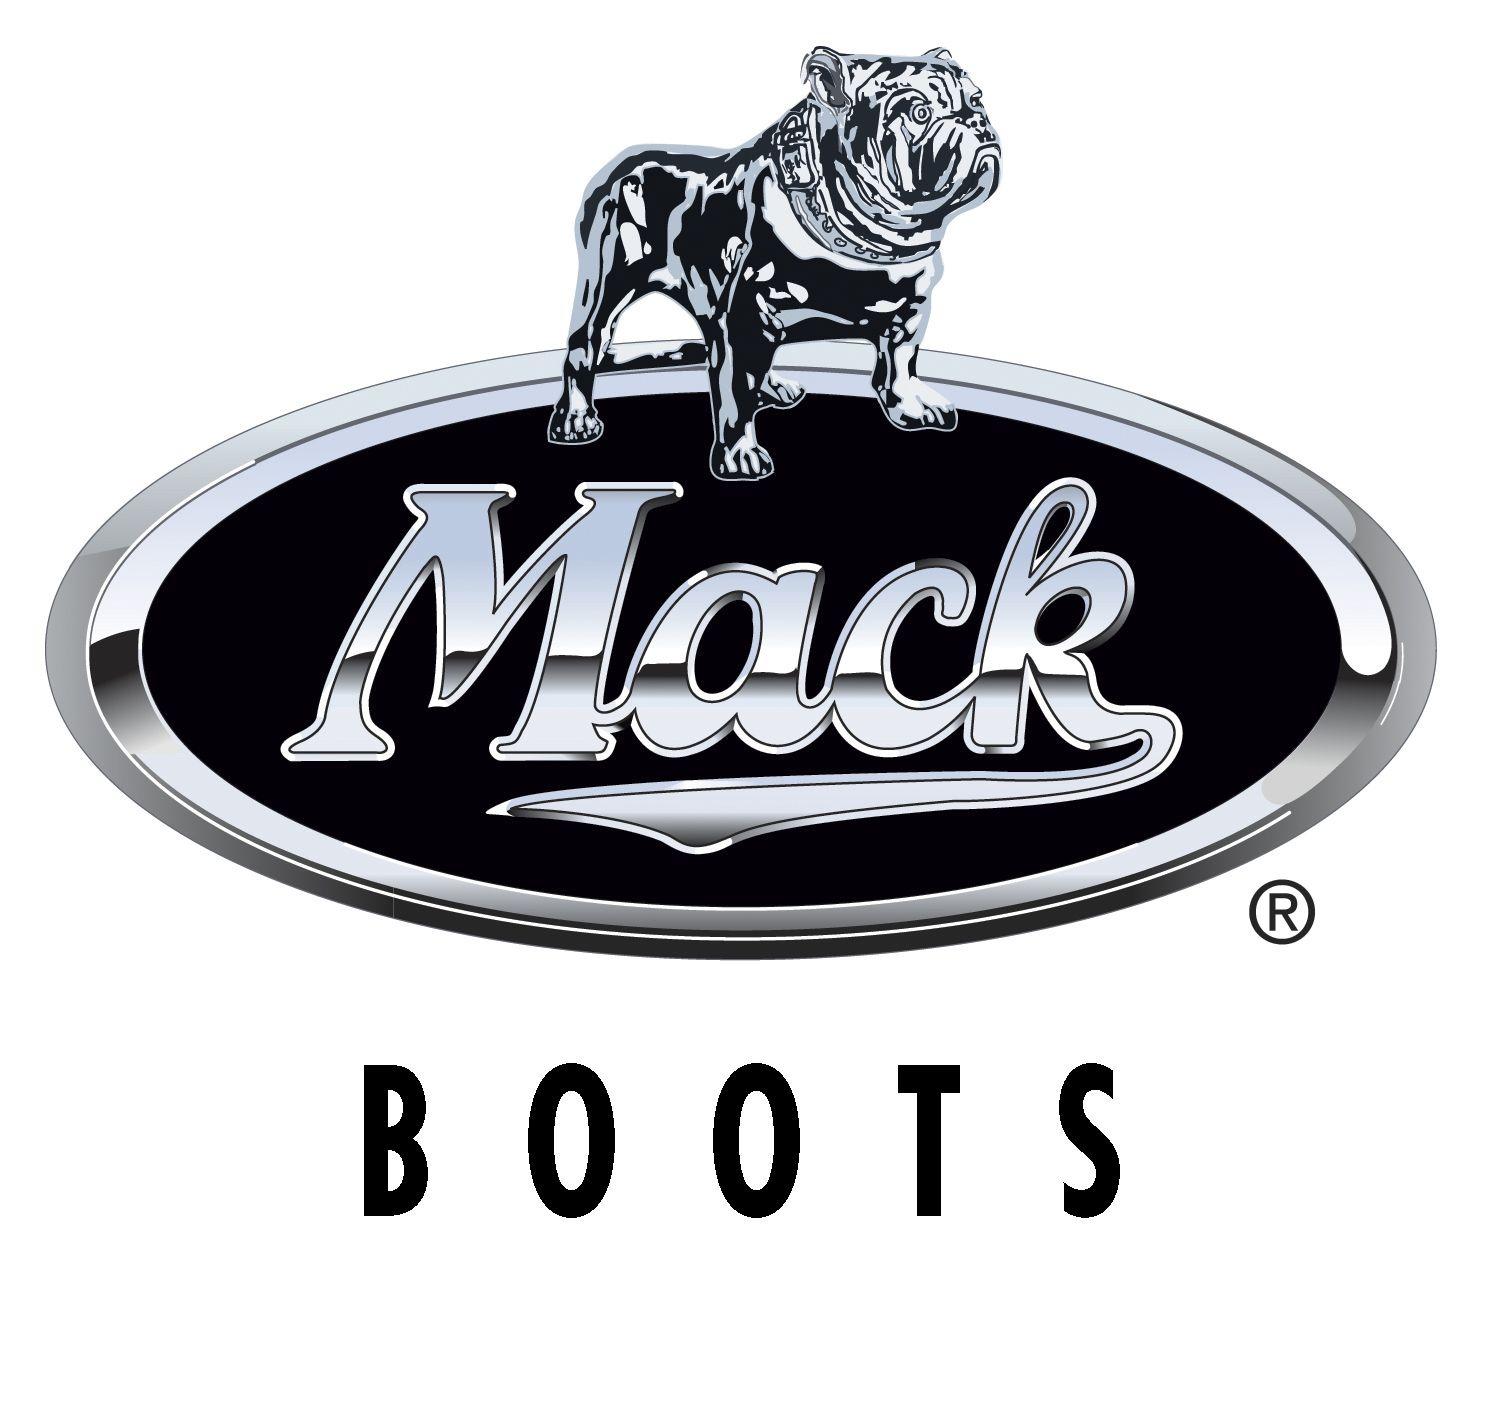 Mack Logo - Image - Mack Full Colour Logo BOOTS.jpg | Global TV (Indonesia) Wiki ...